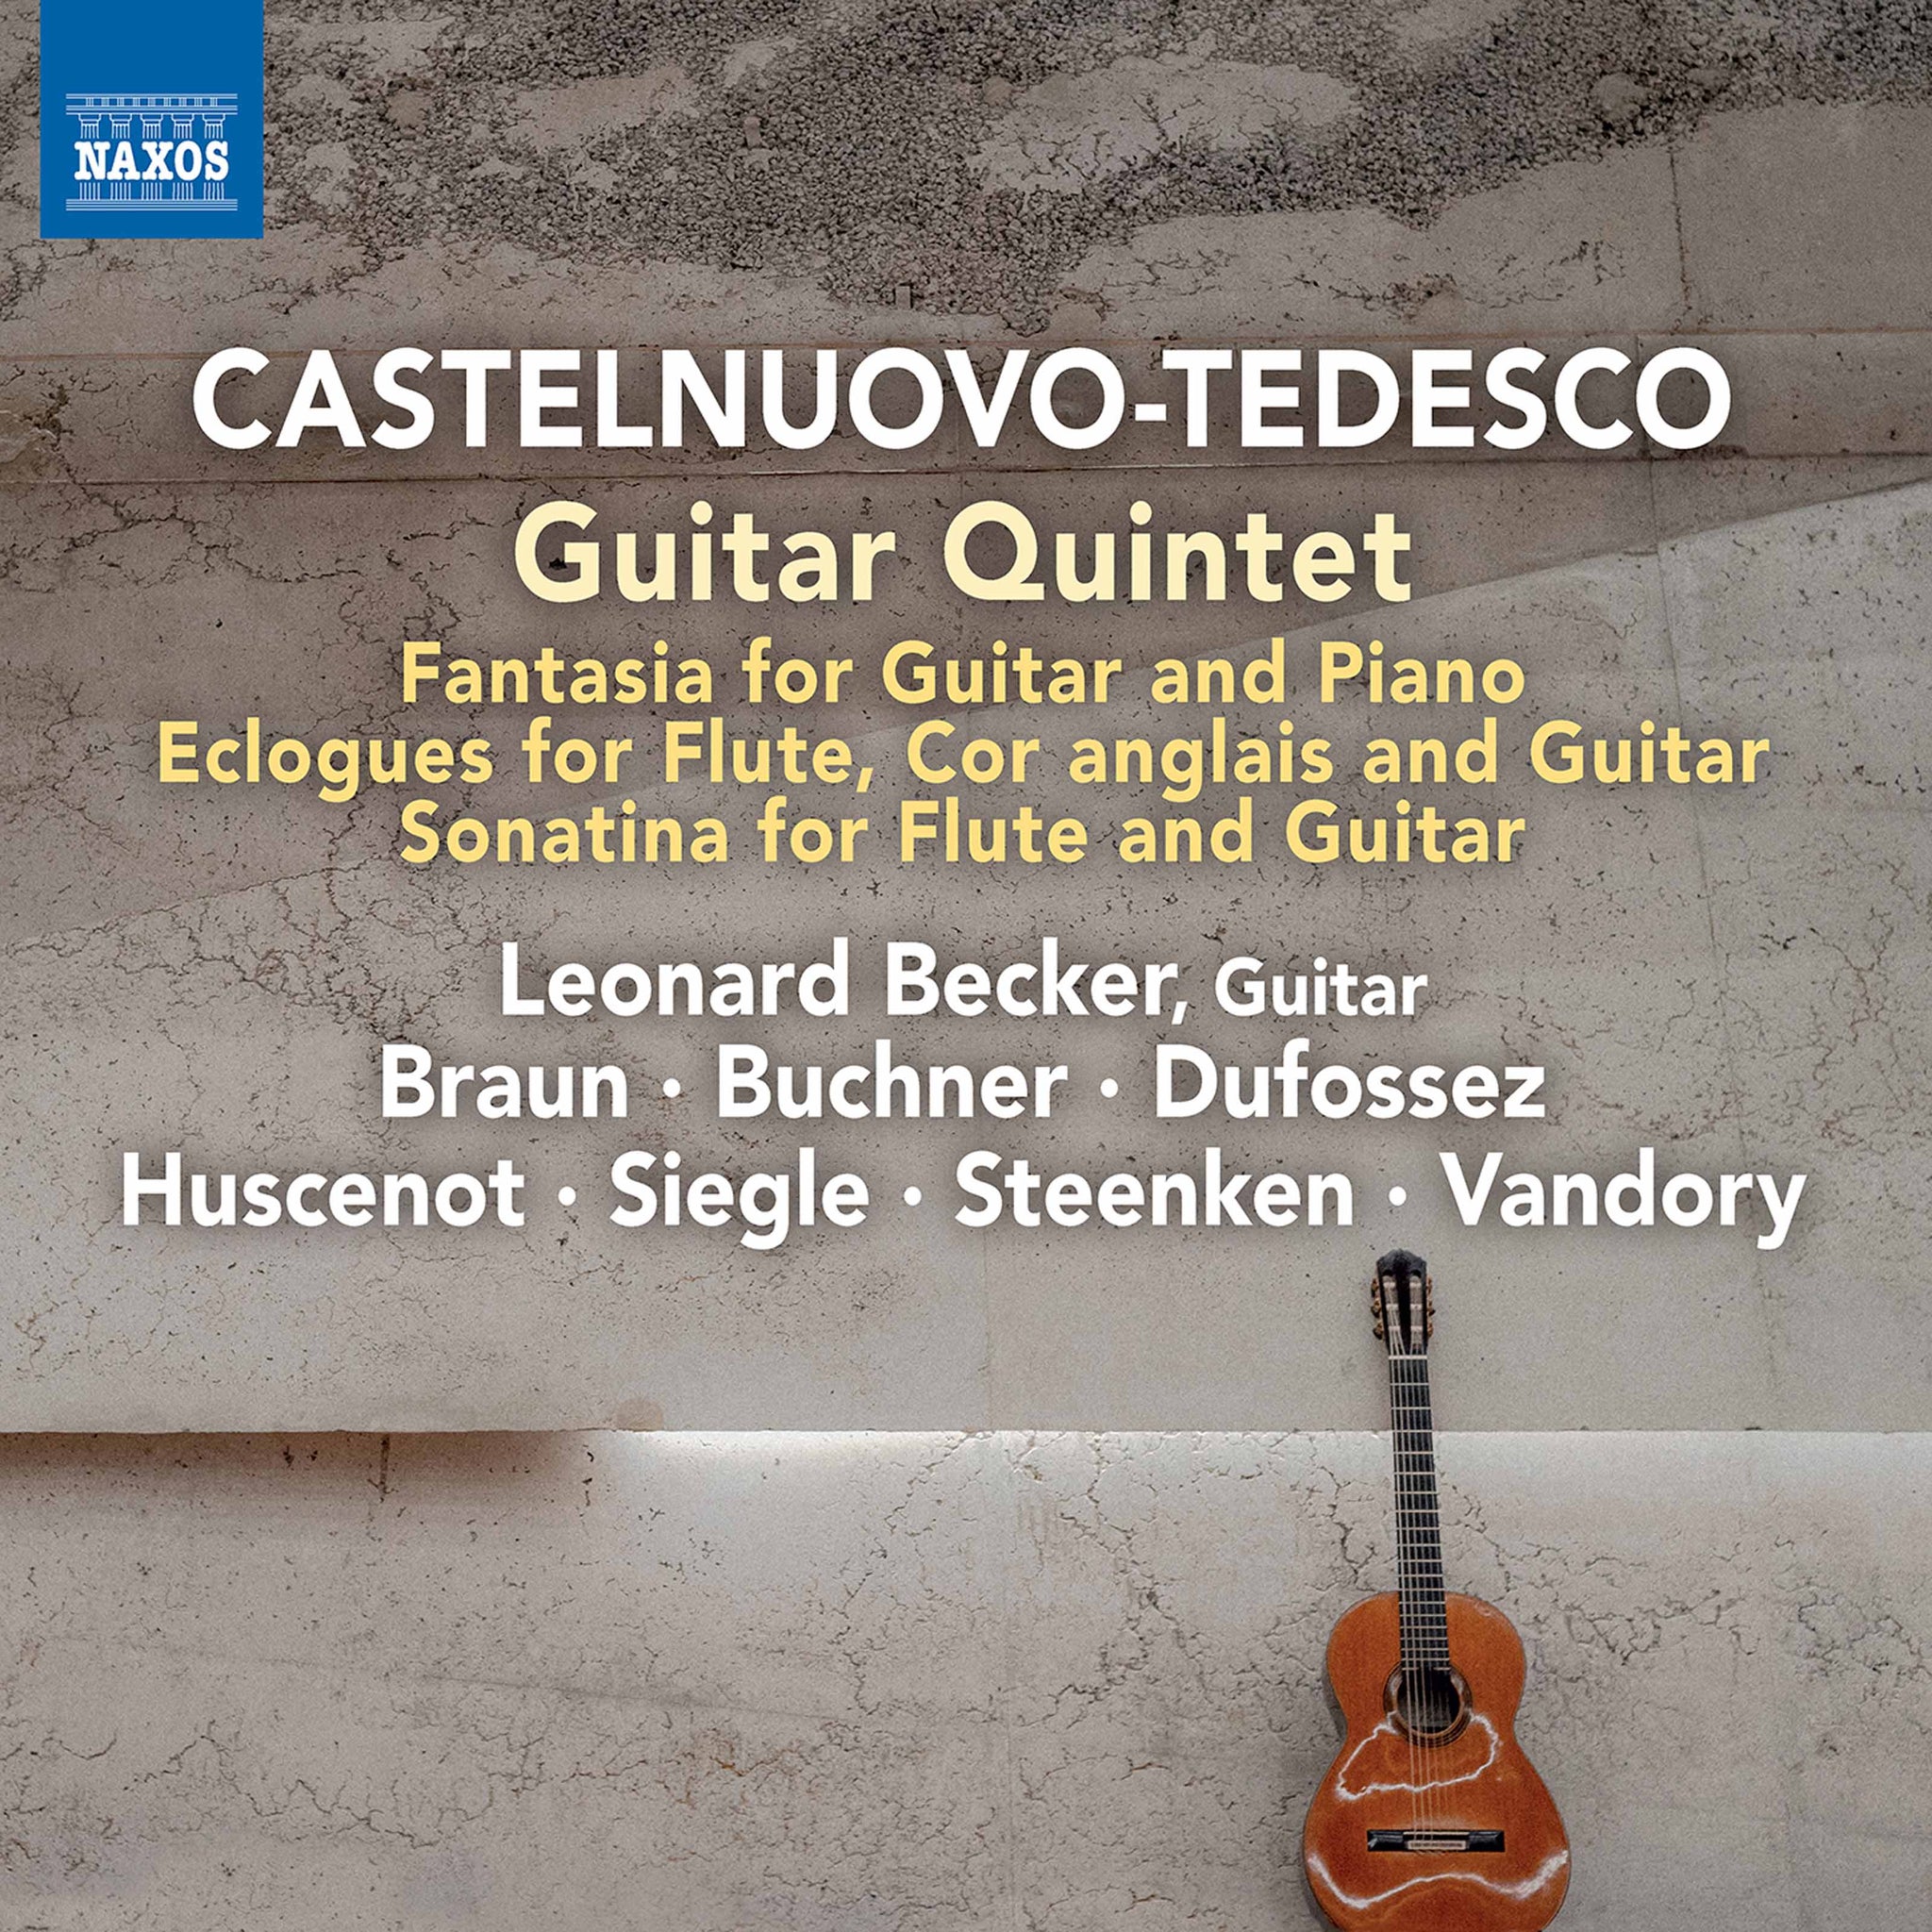 Castelnuovo-Tedesco: Guitar Quintet - Fantasia - Eclogues - Sonatina for Flute and Guitar